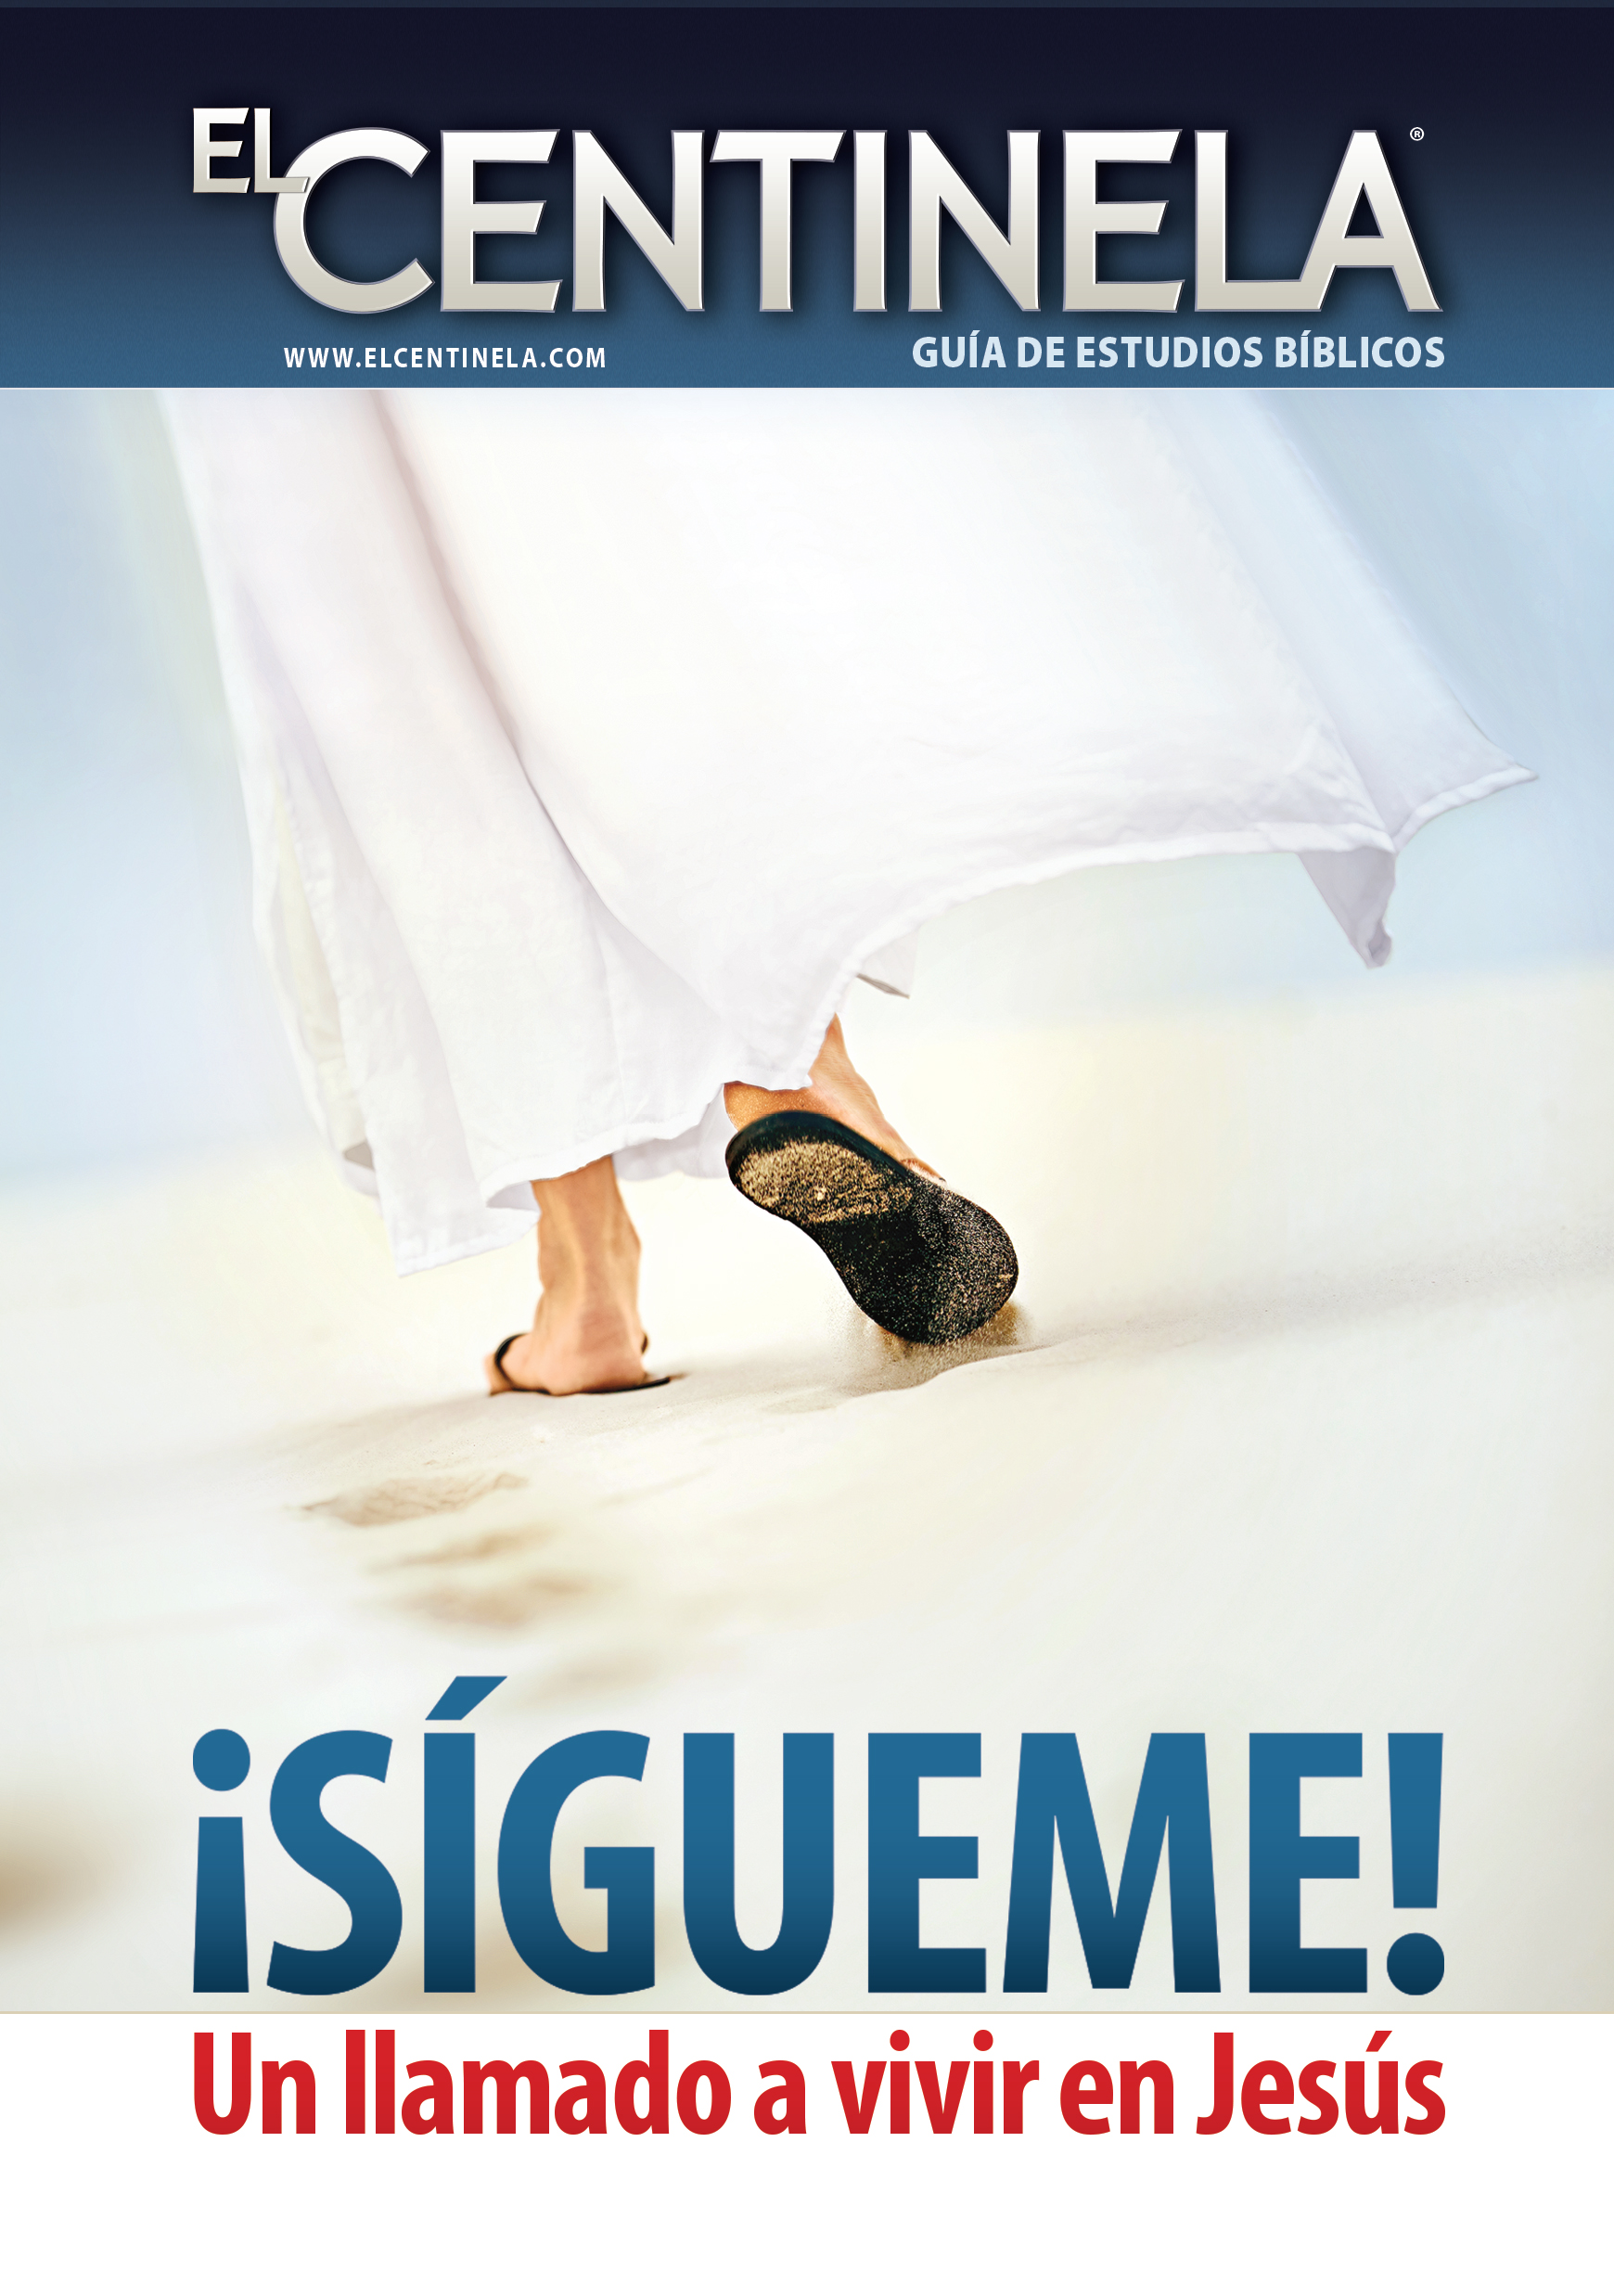 Book cover for Sígueme, un llamado a vivir en Jesús (Follow Me—a call to live in Jesus).